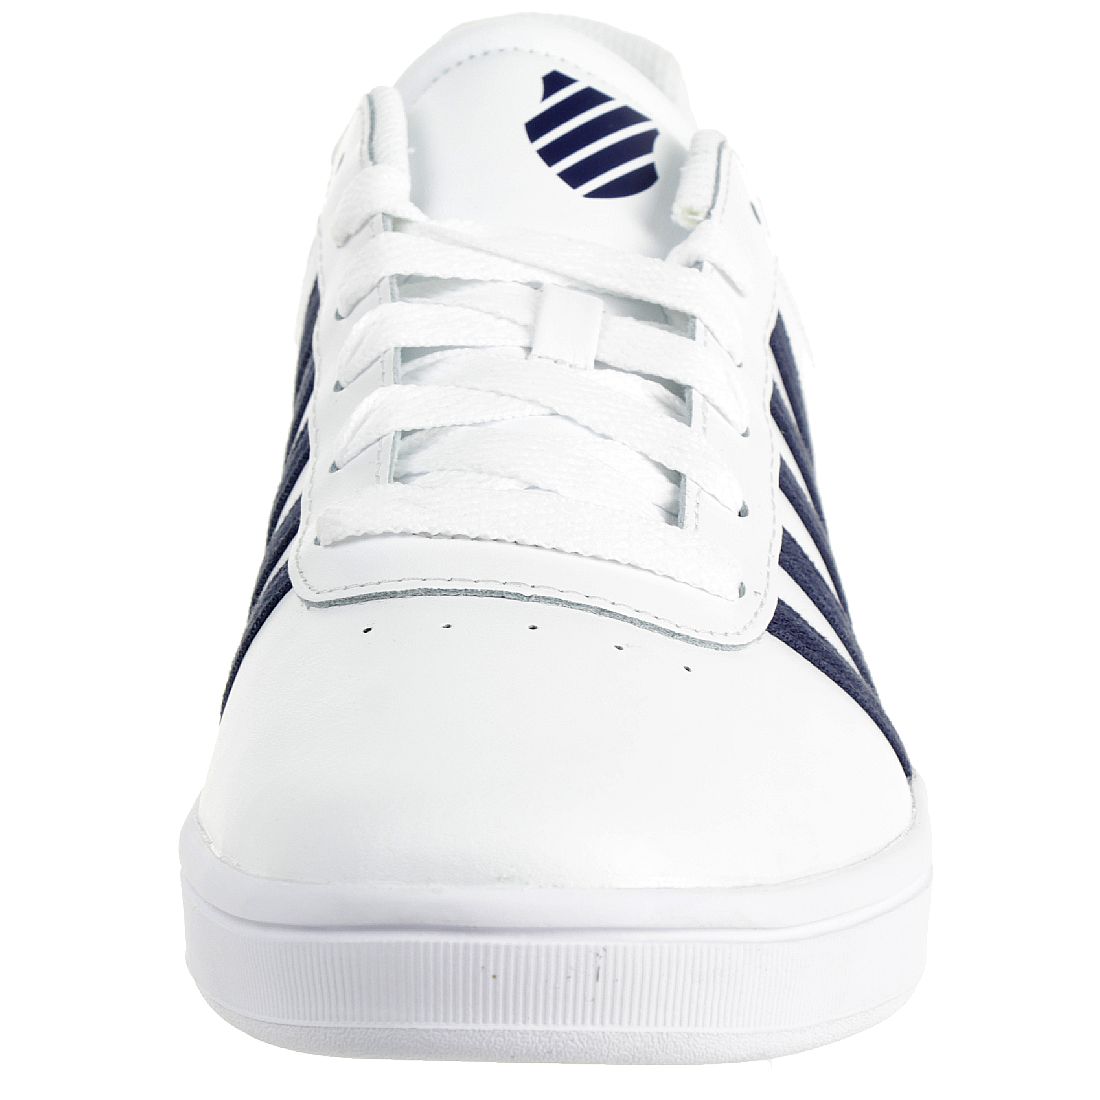 K-SWISS Court Cheswick Schuhe Sneaker weiss blau 05585-169-M